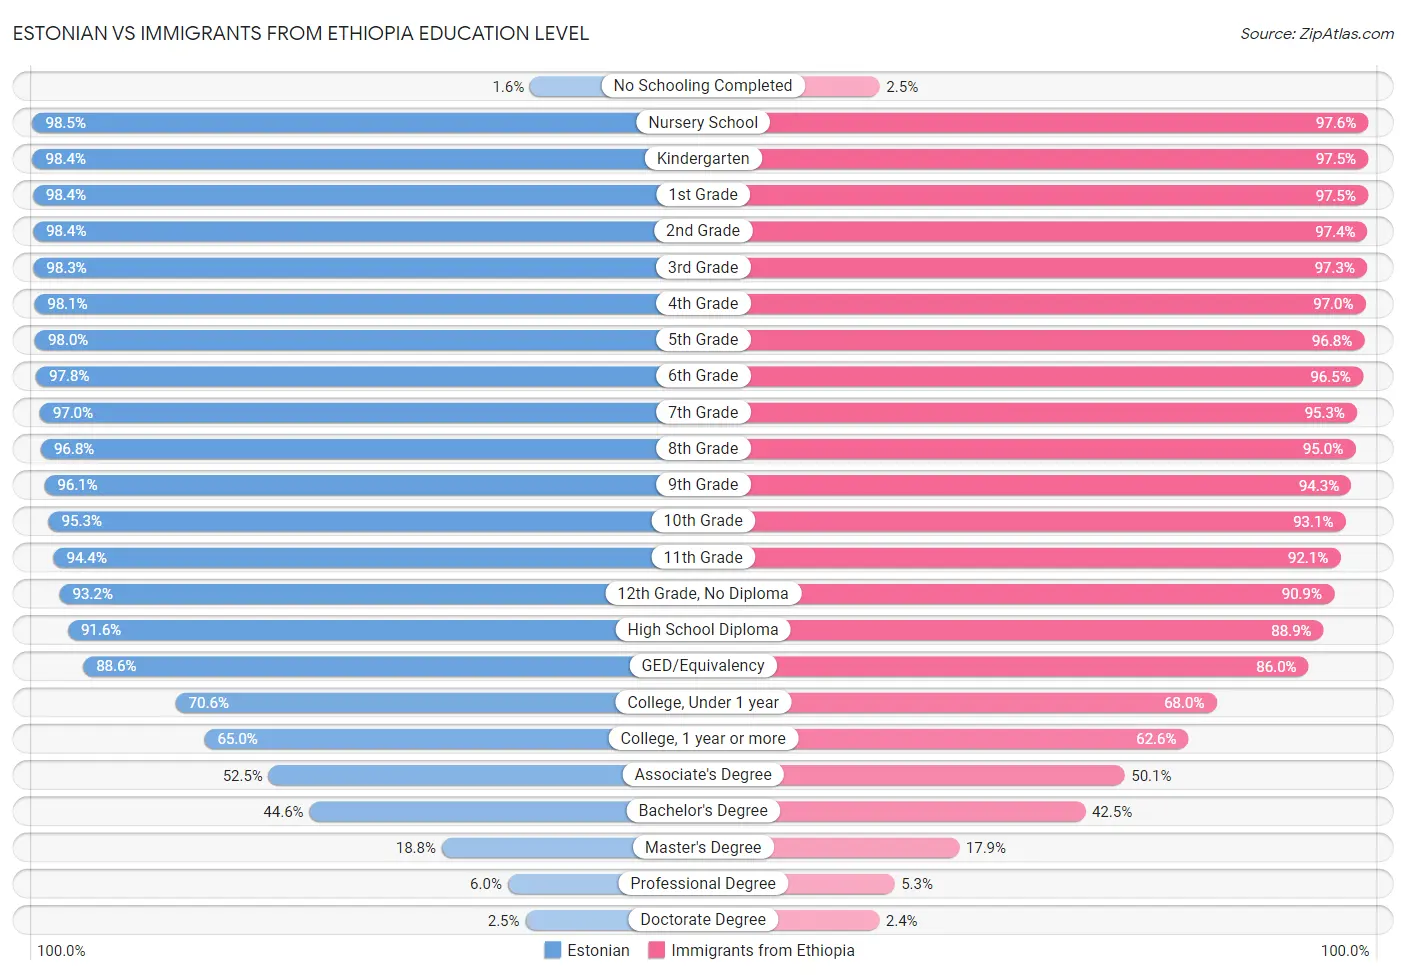 Estonian vs Immigrants from Ethiopia Education Level